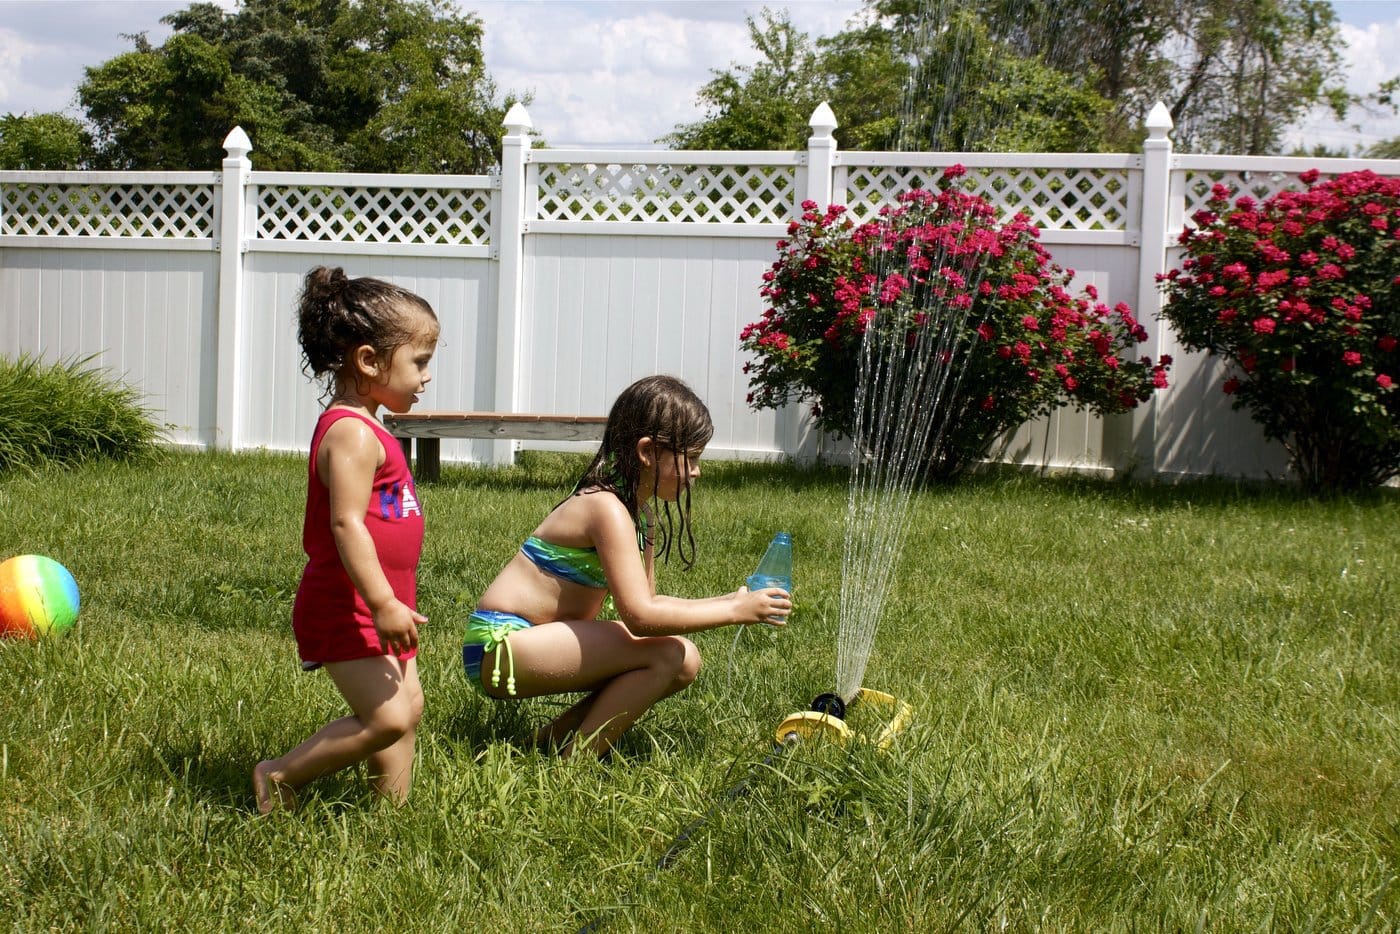 Sprinkler fun on the grass in the backyard